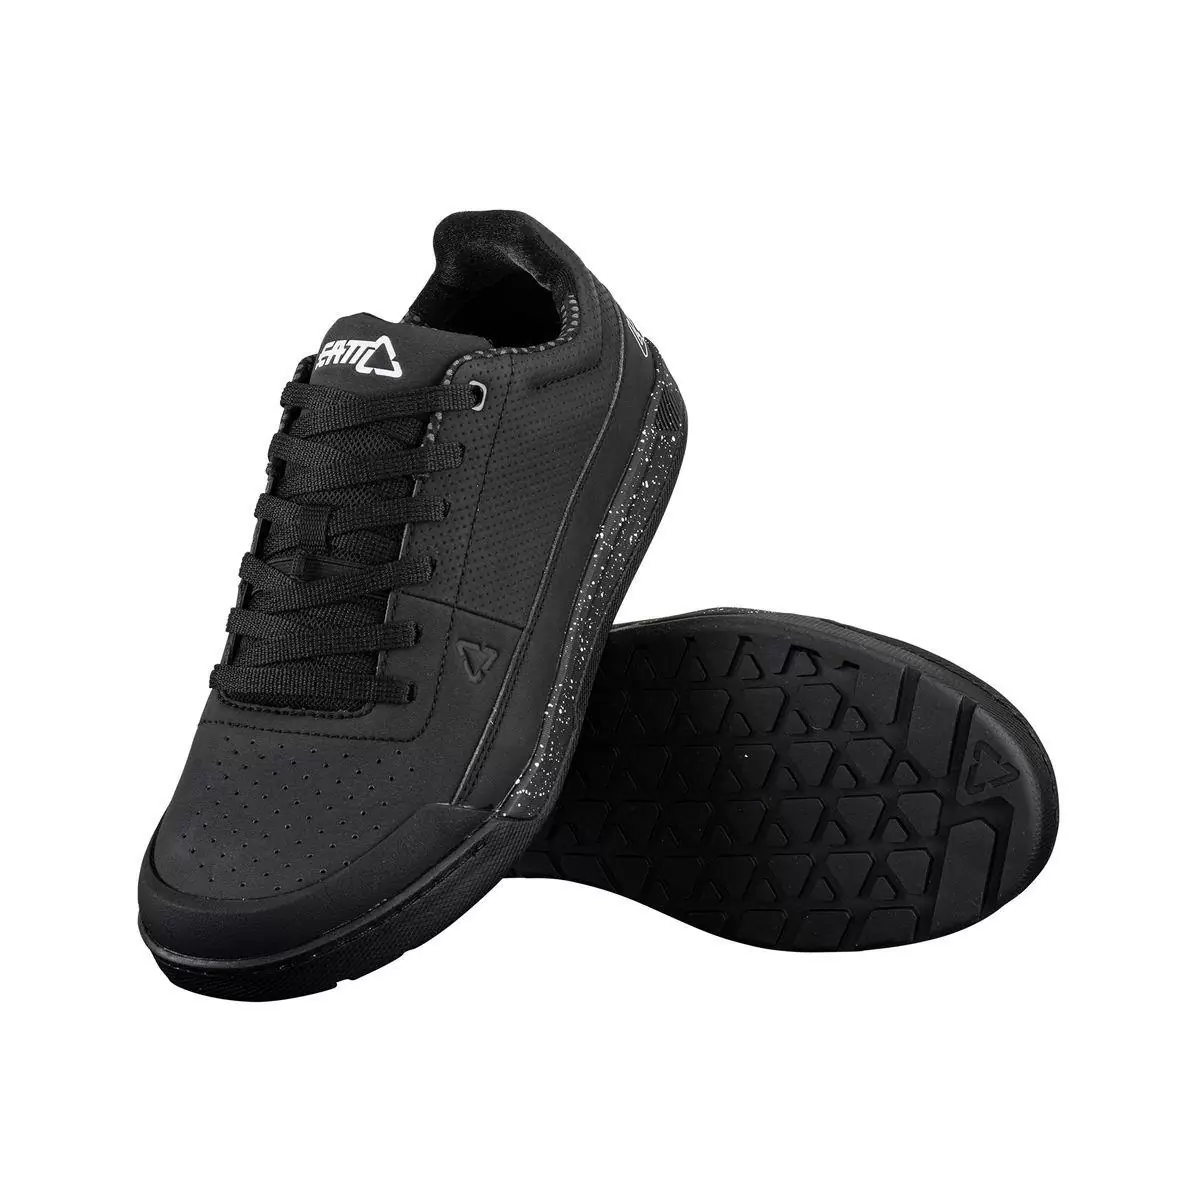 Mtb Shoes 2.0 Flat Black Size 44 #5